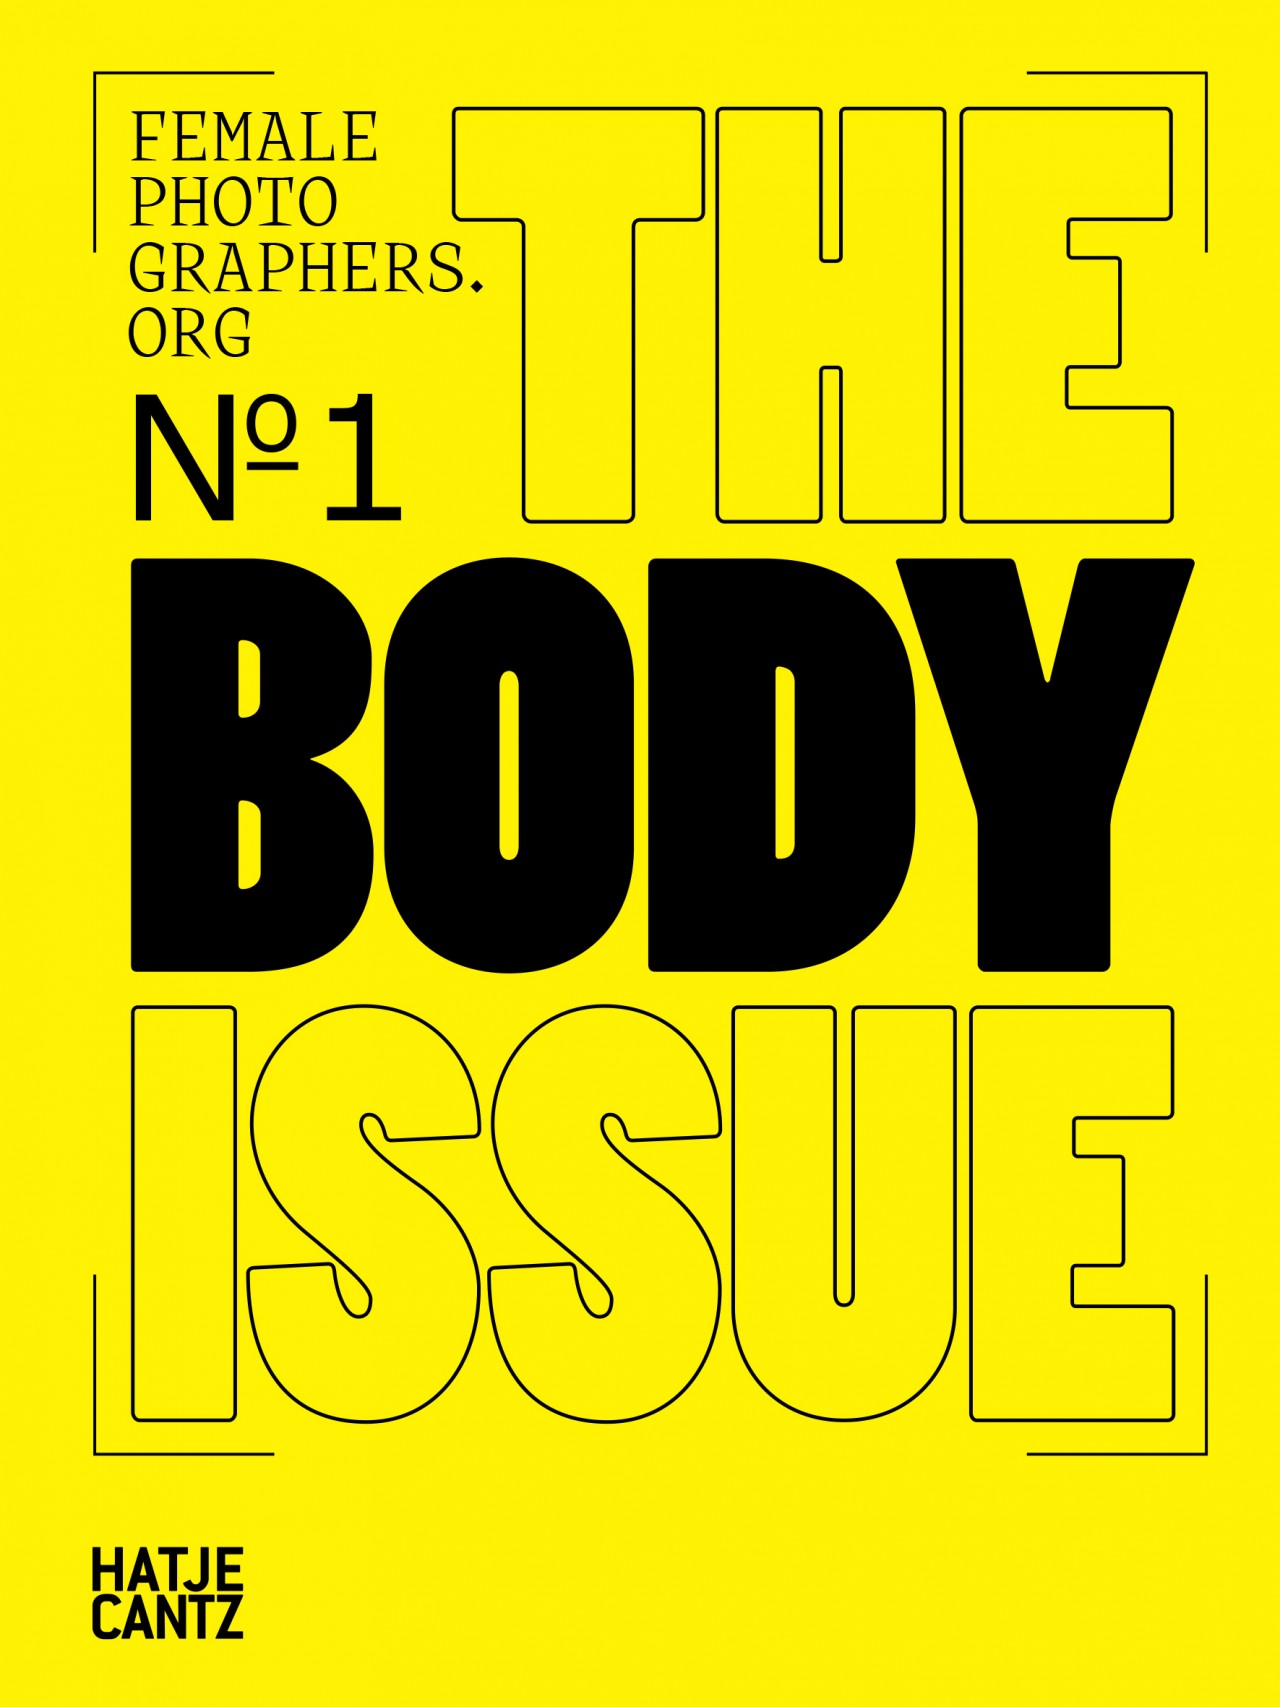 KIRSTEN BECKEN THE BODY ISSUE by femxphotographers.org